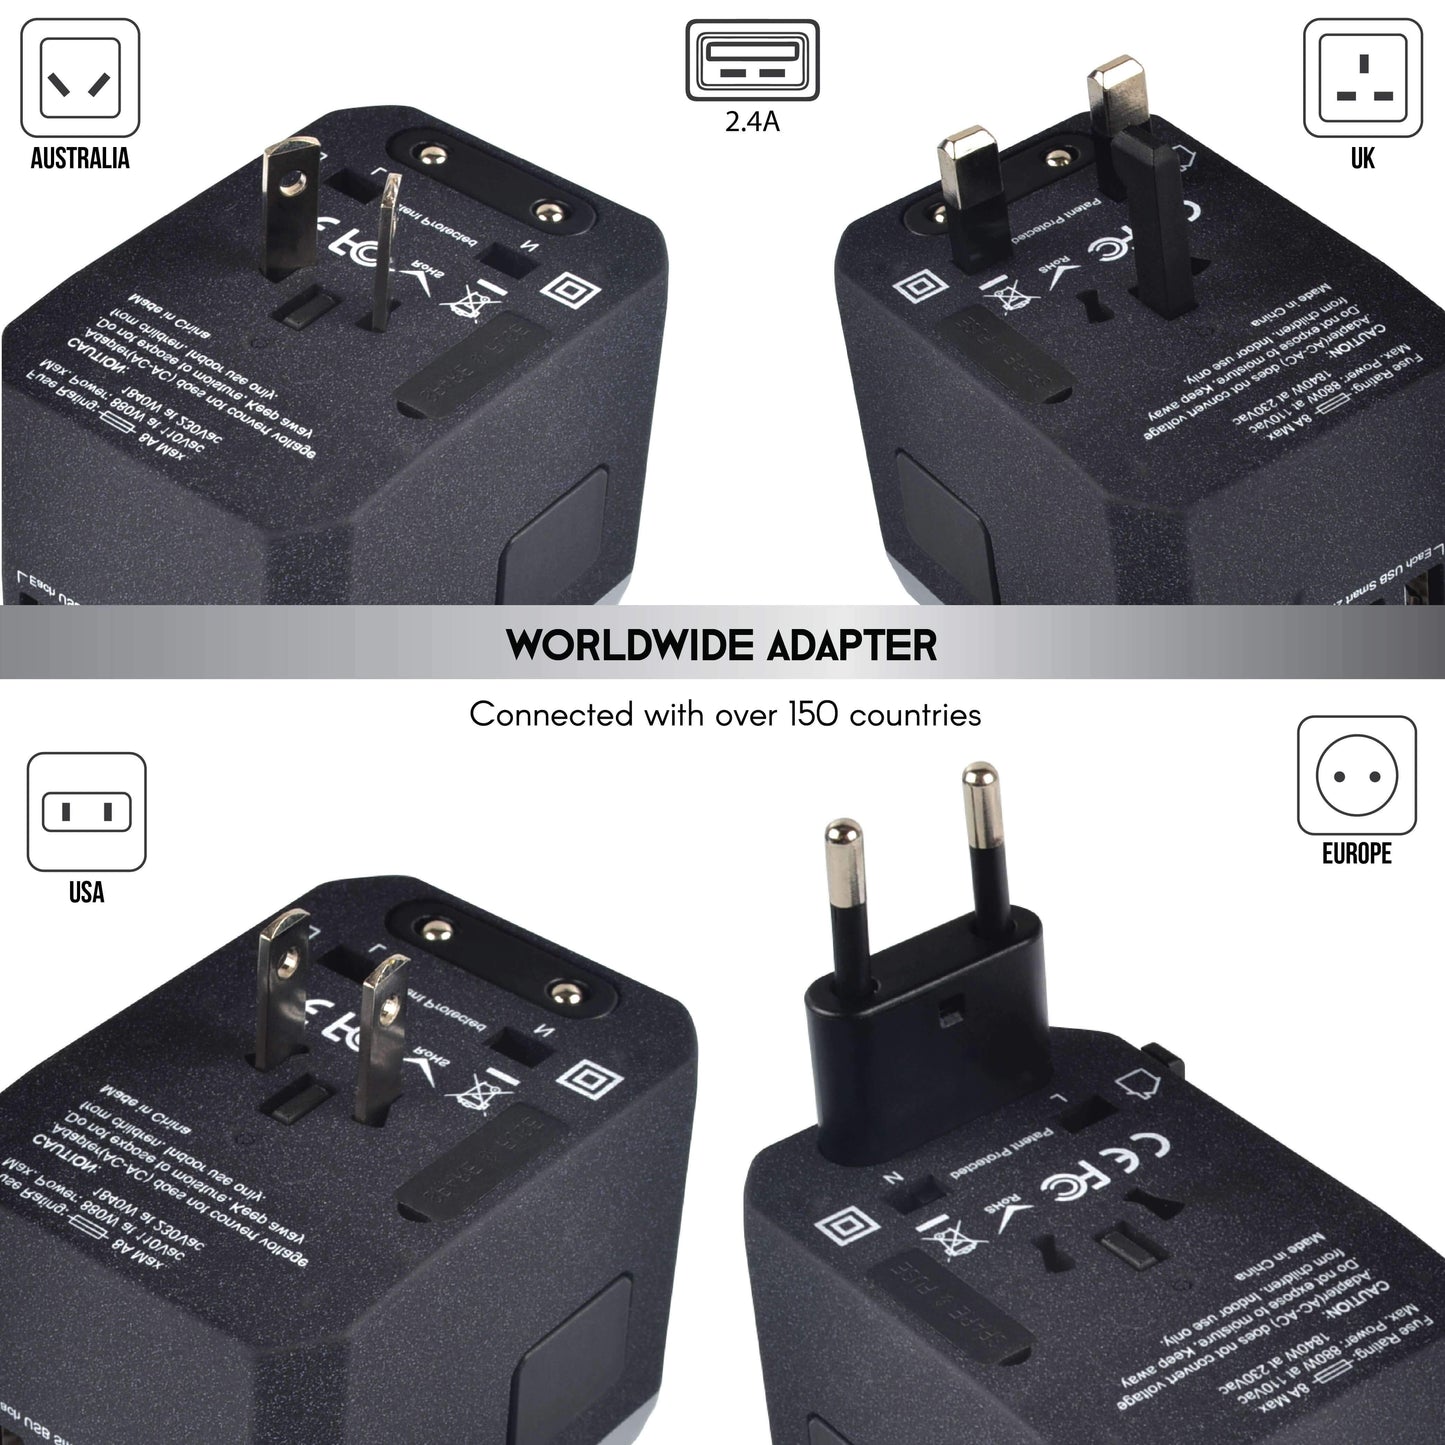 5 USB Ports Power Plug Adapter (Sandblack Silver)